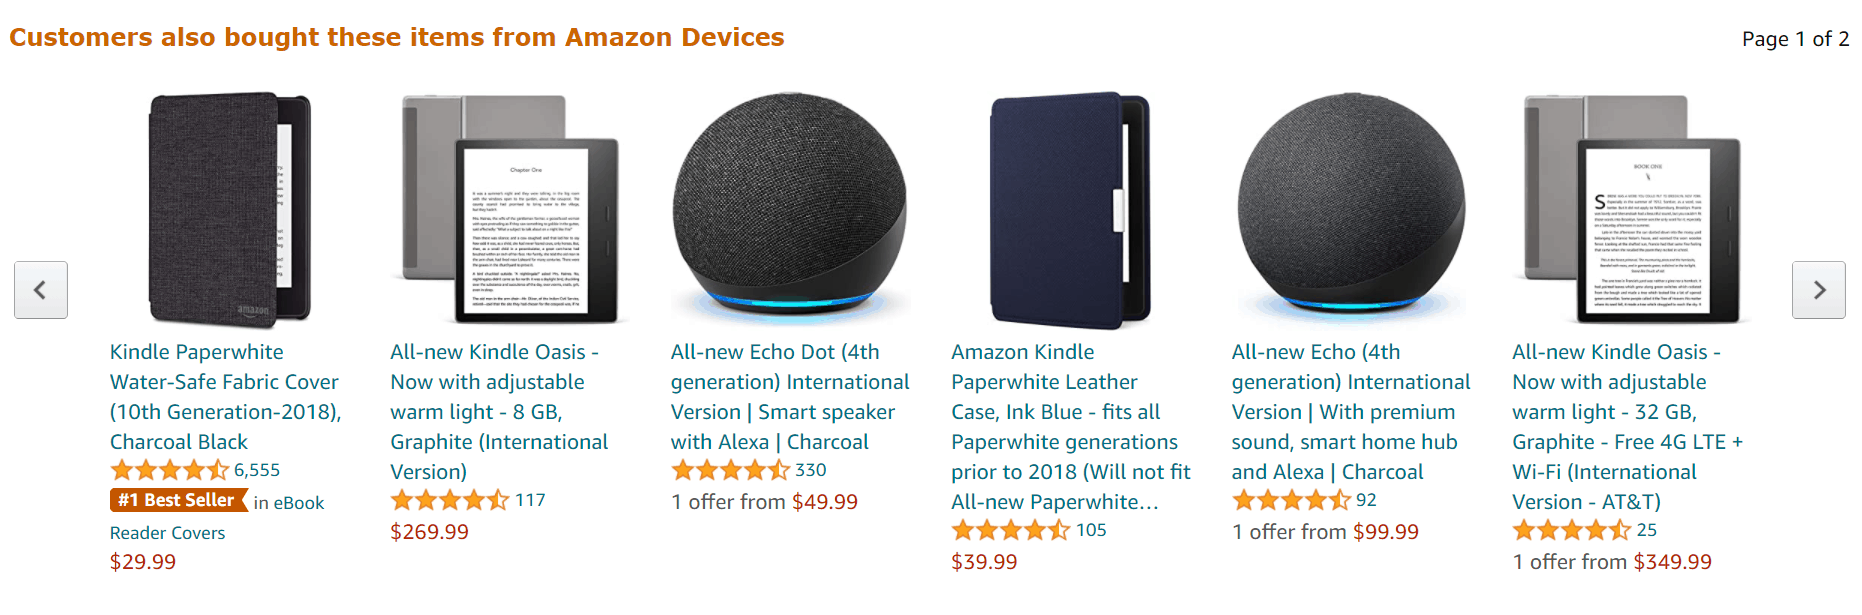 Amazon Kindle Paperwhite Device